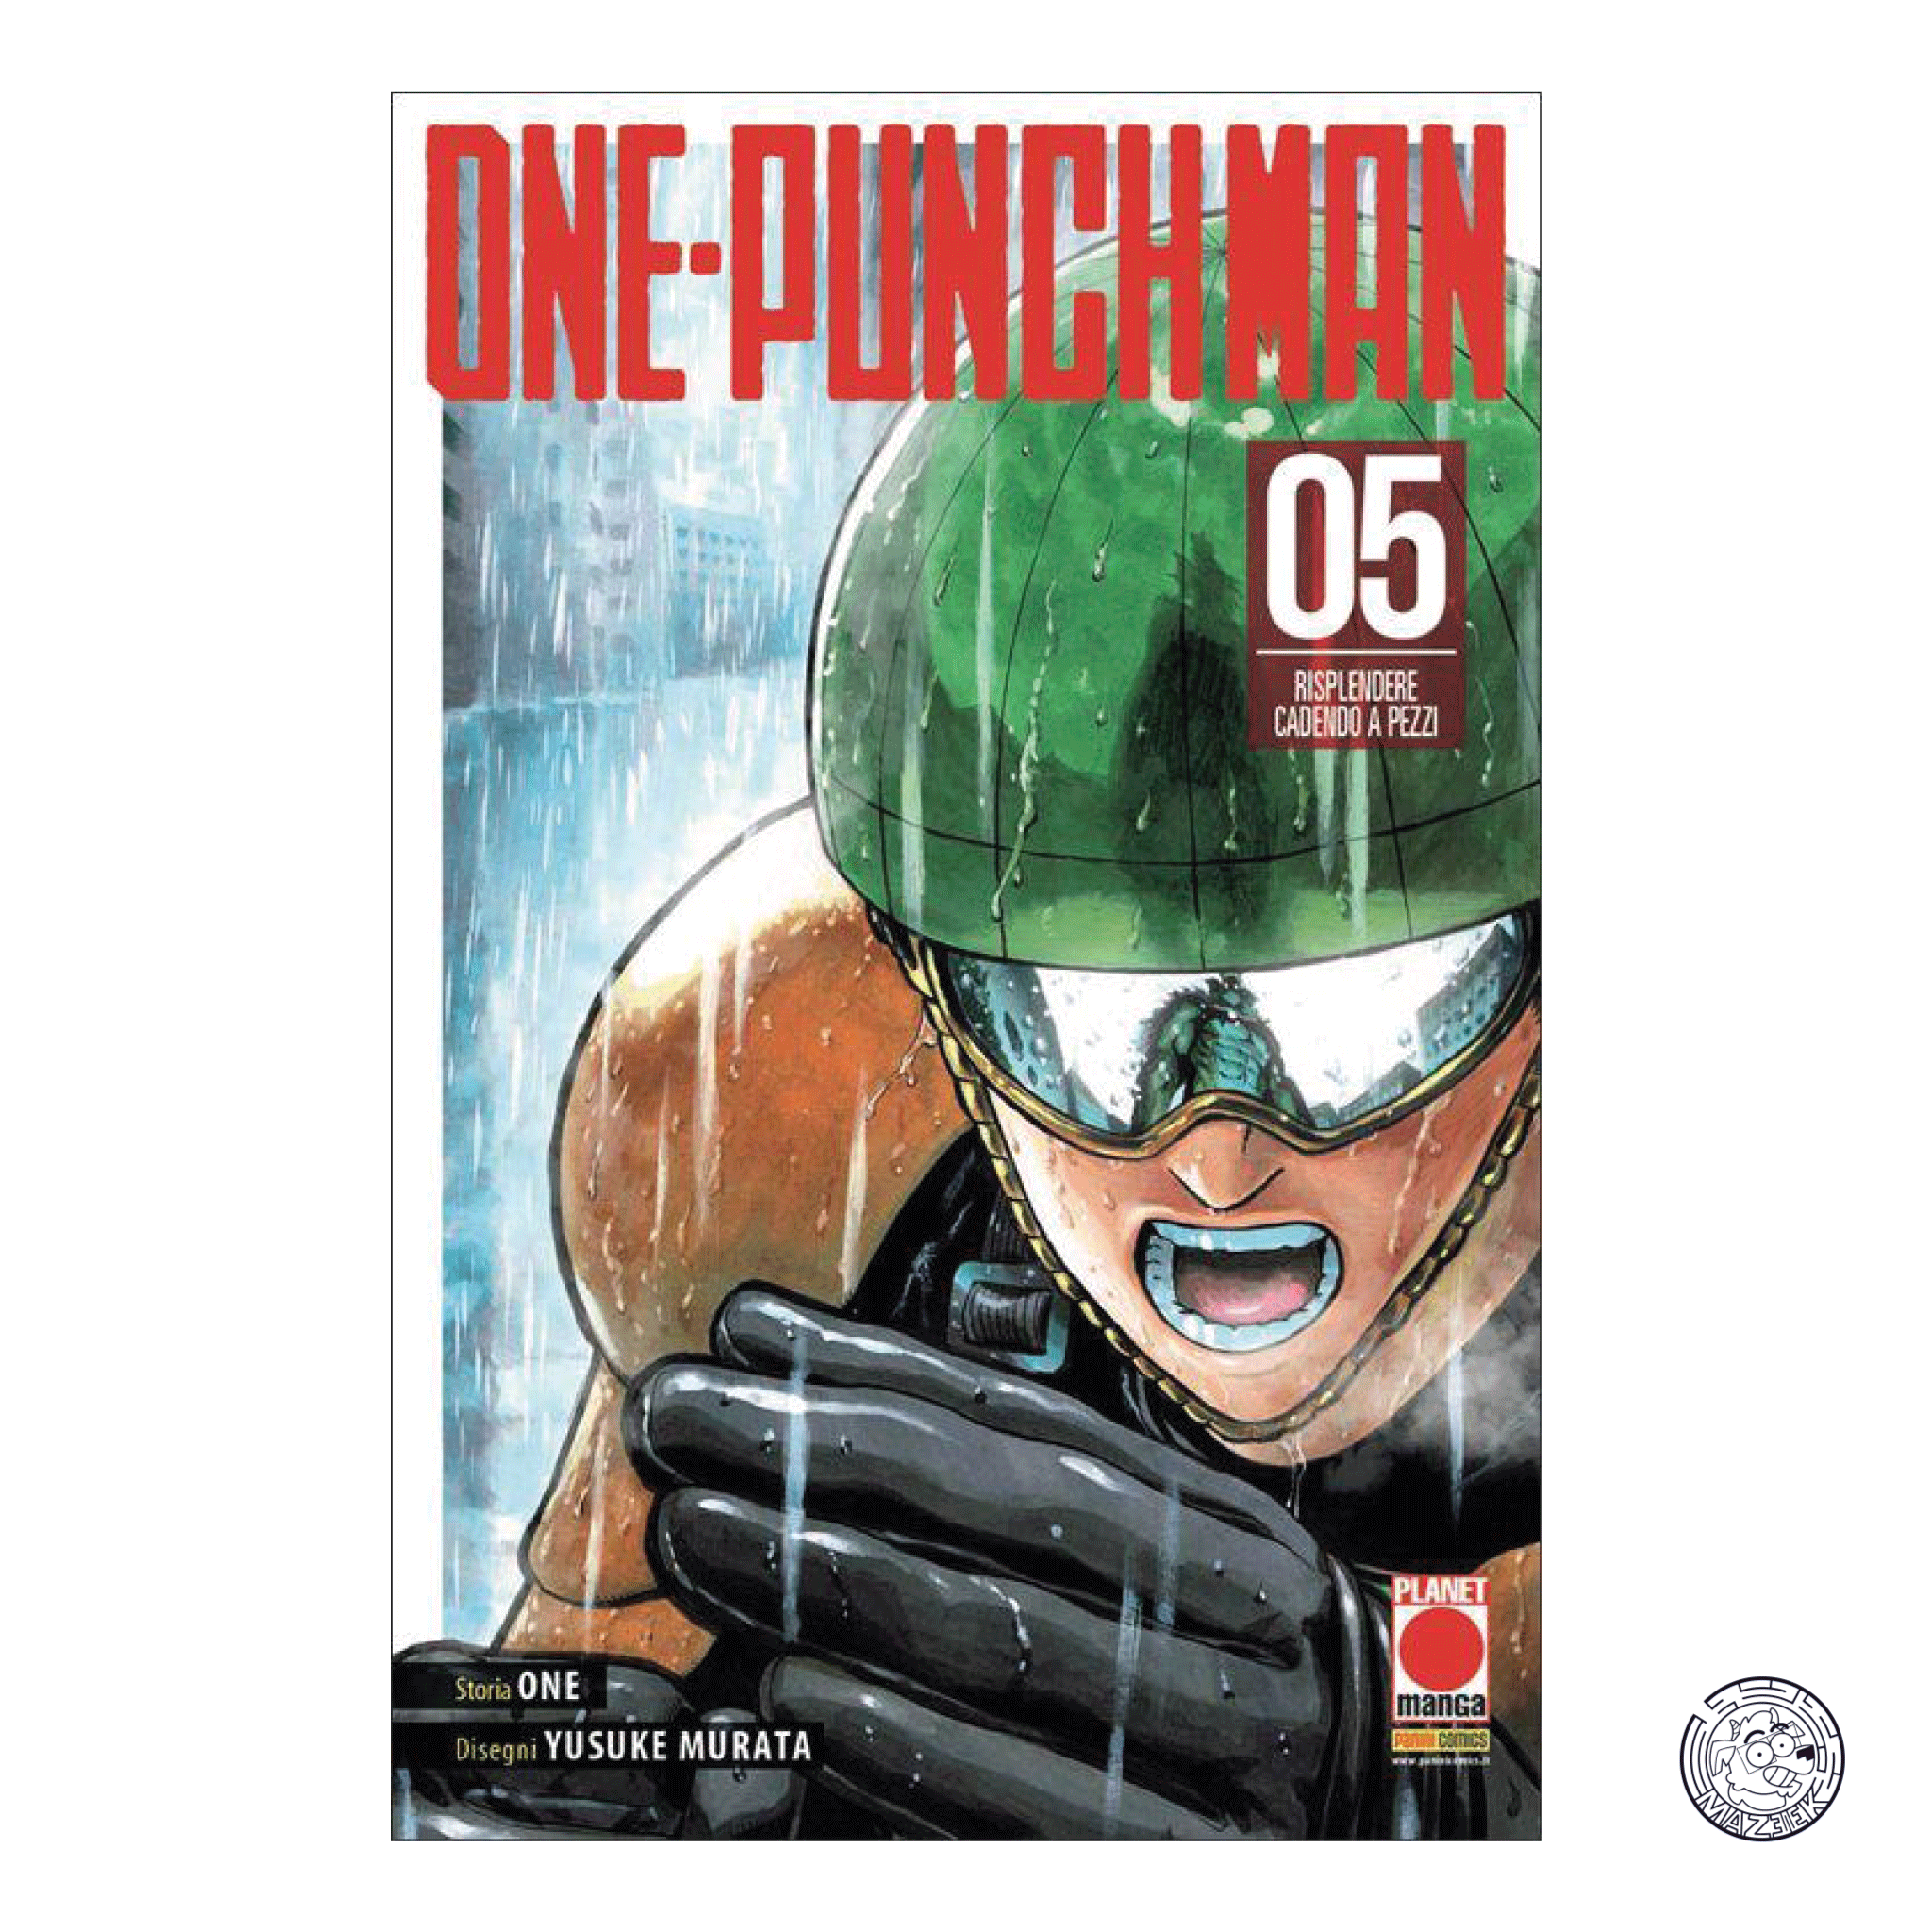 One-Punch Man 05 - Reprint 1